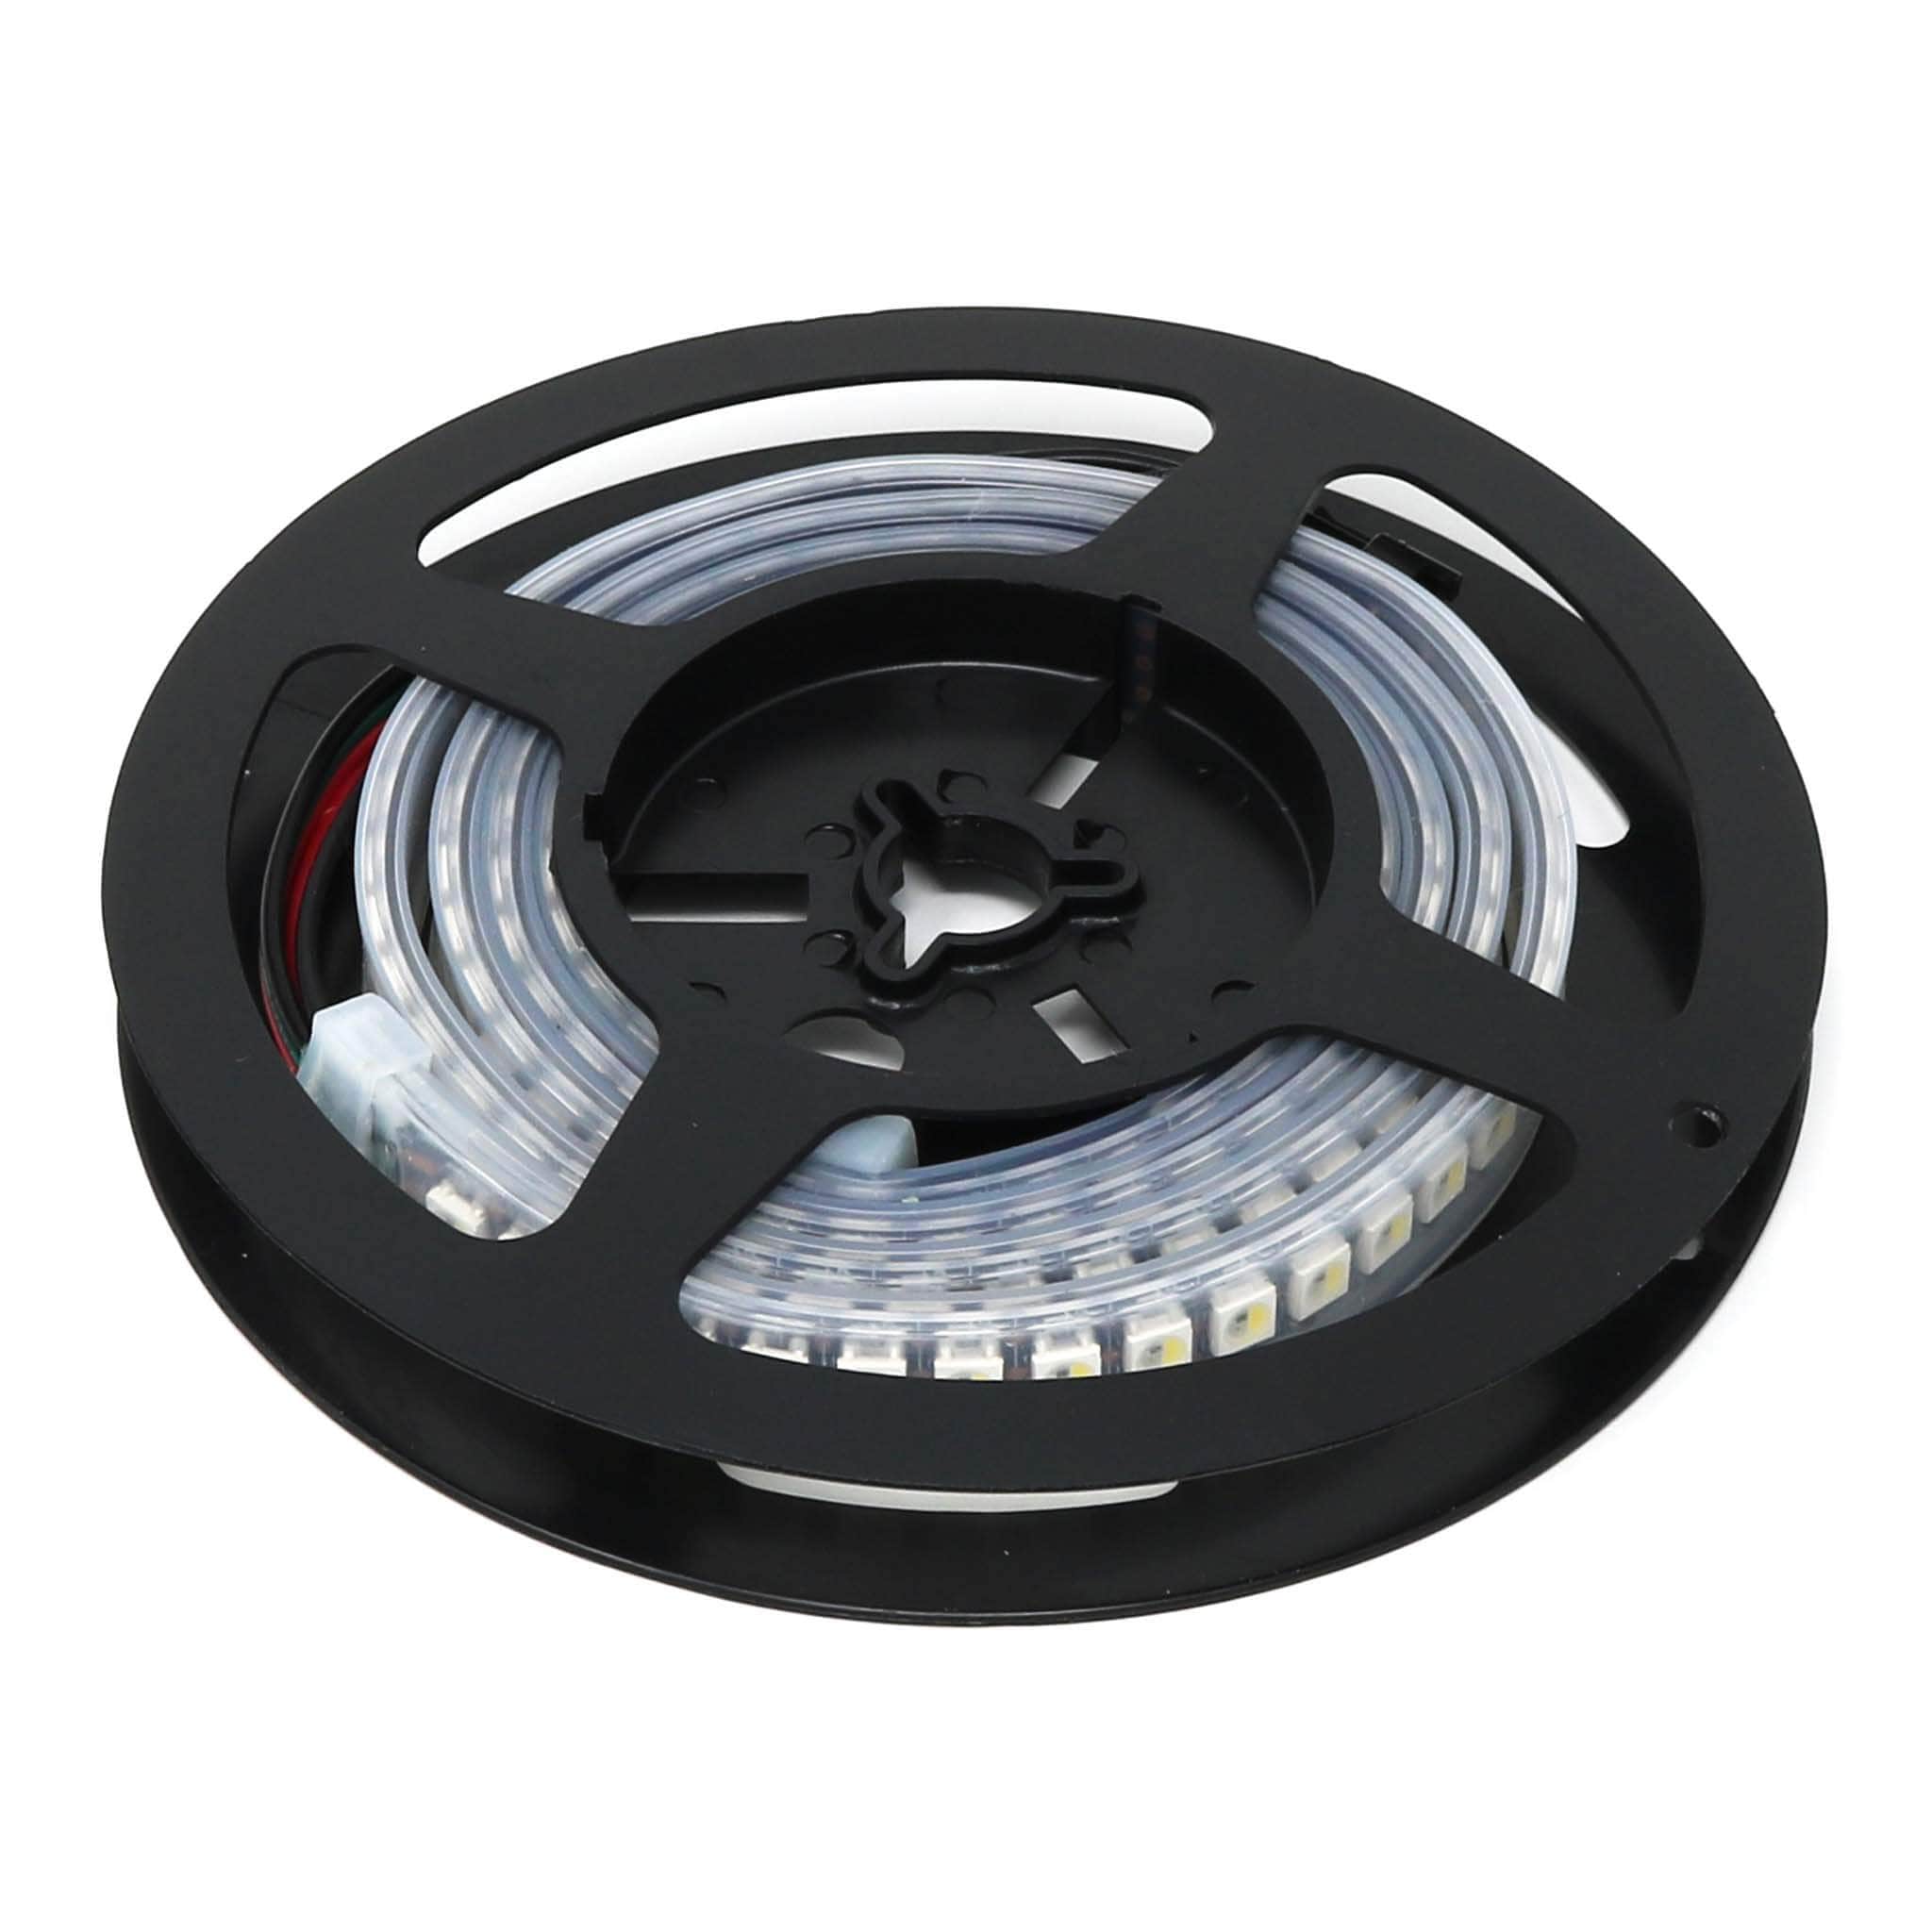 Flexible RGBW LED Strip (NeoPixel/WS2812/SK6812 compatible) - 144 LED/Metre - The Pi Hut